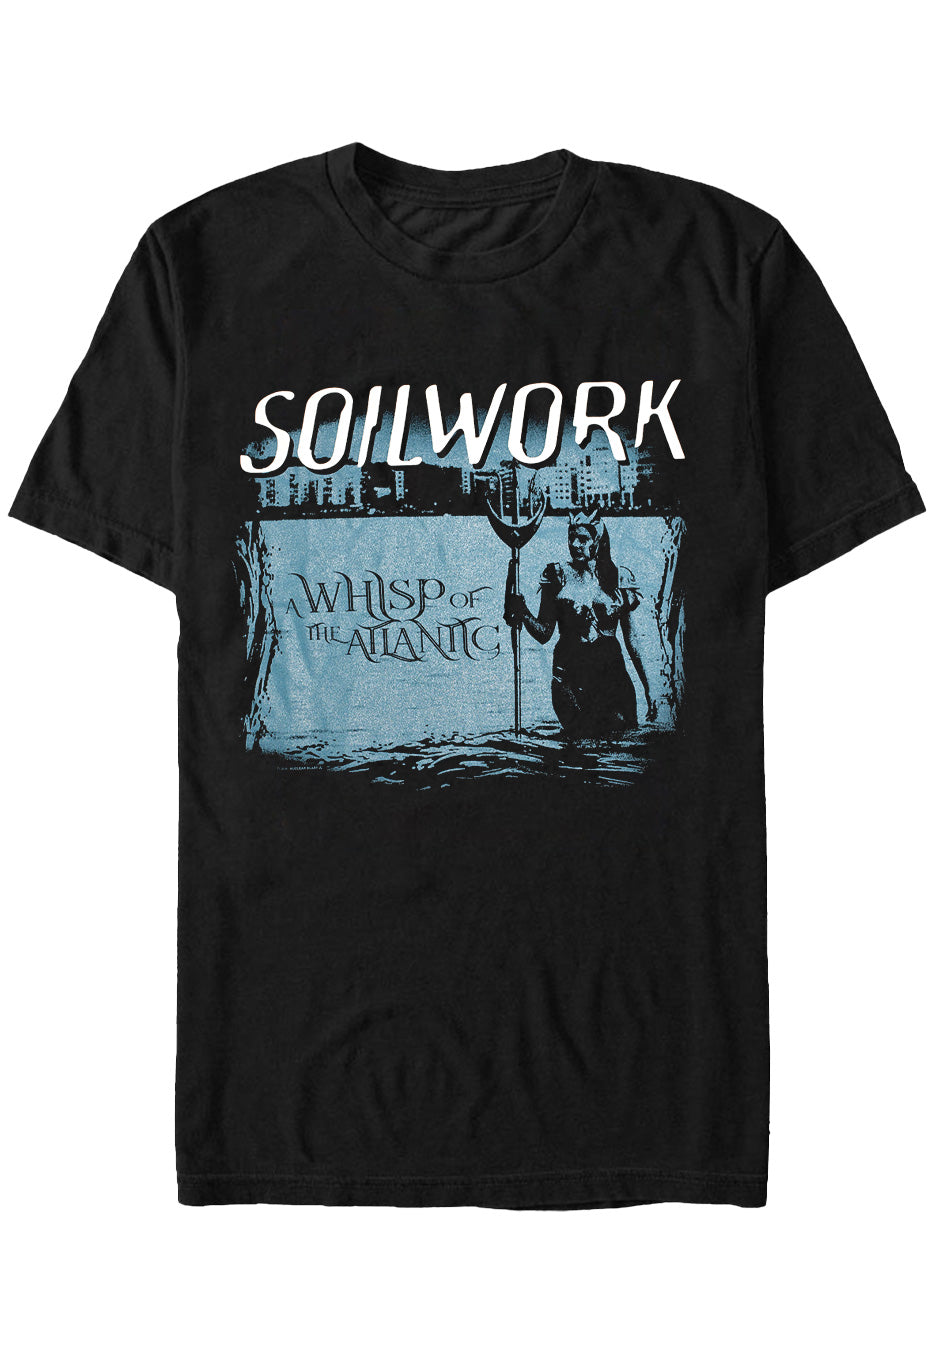 Soilwork - A Whisp Of The Atlantic - T-Shirt